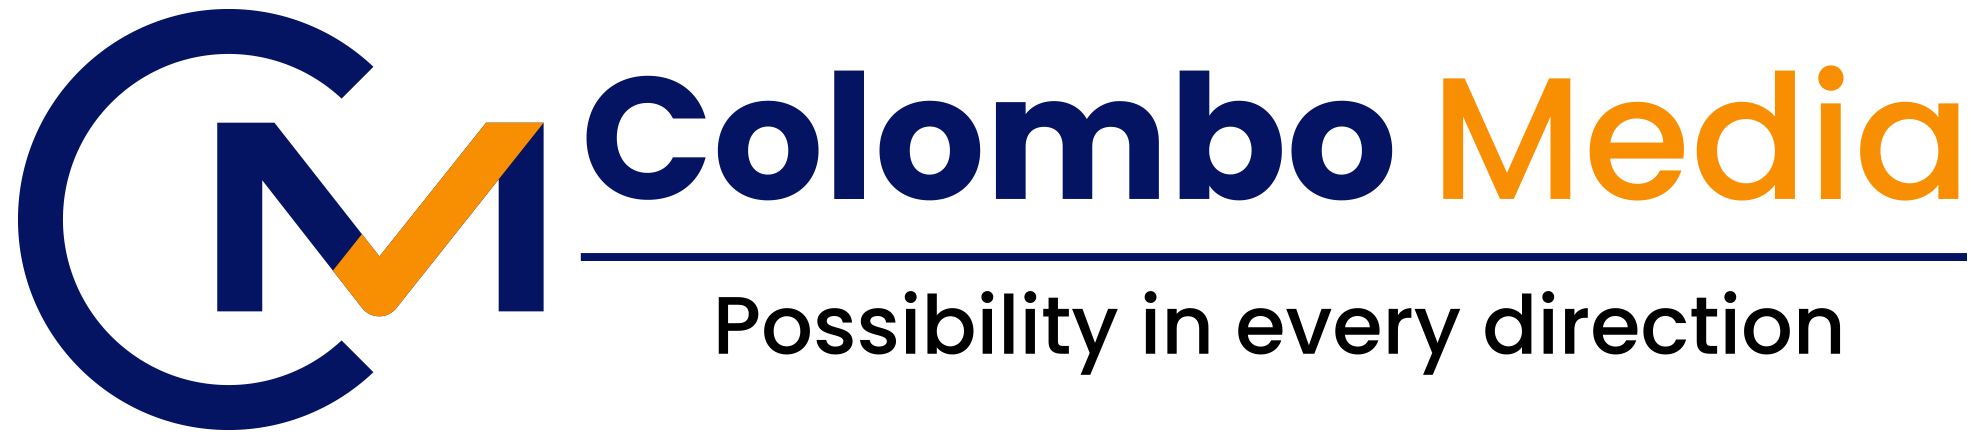 Colombo Media (Pvt) Ltd.